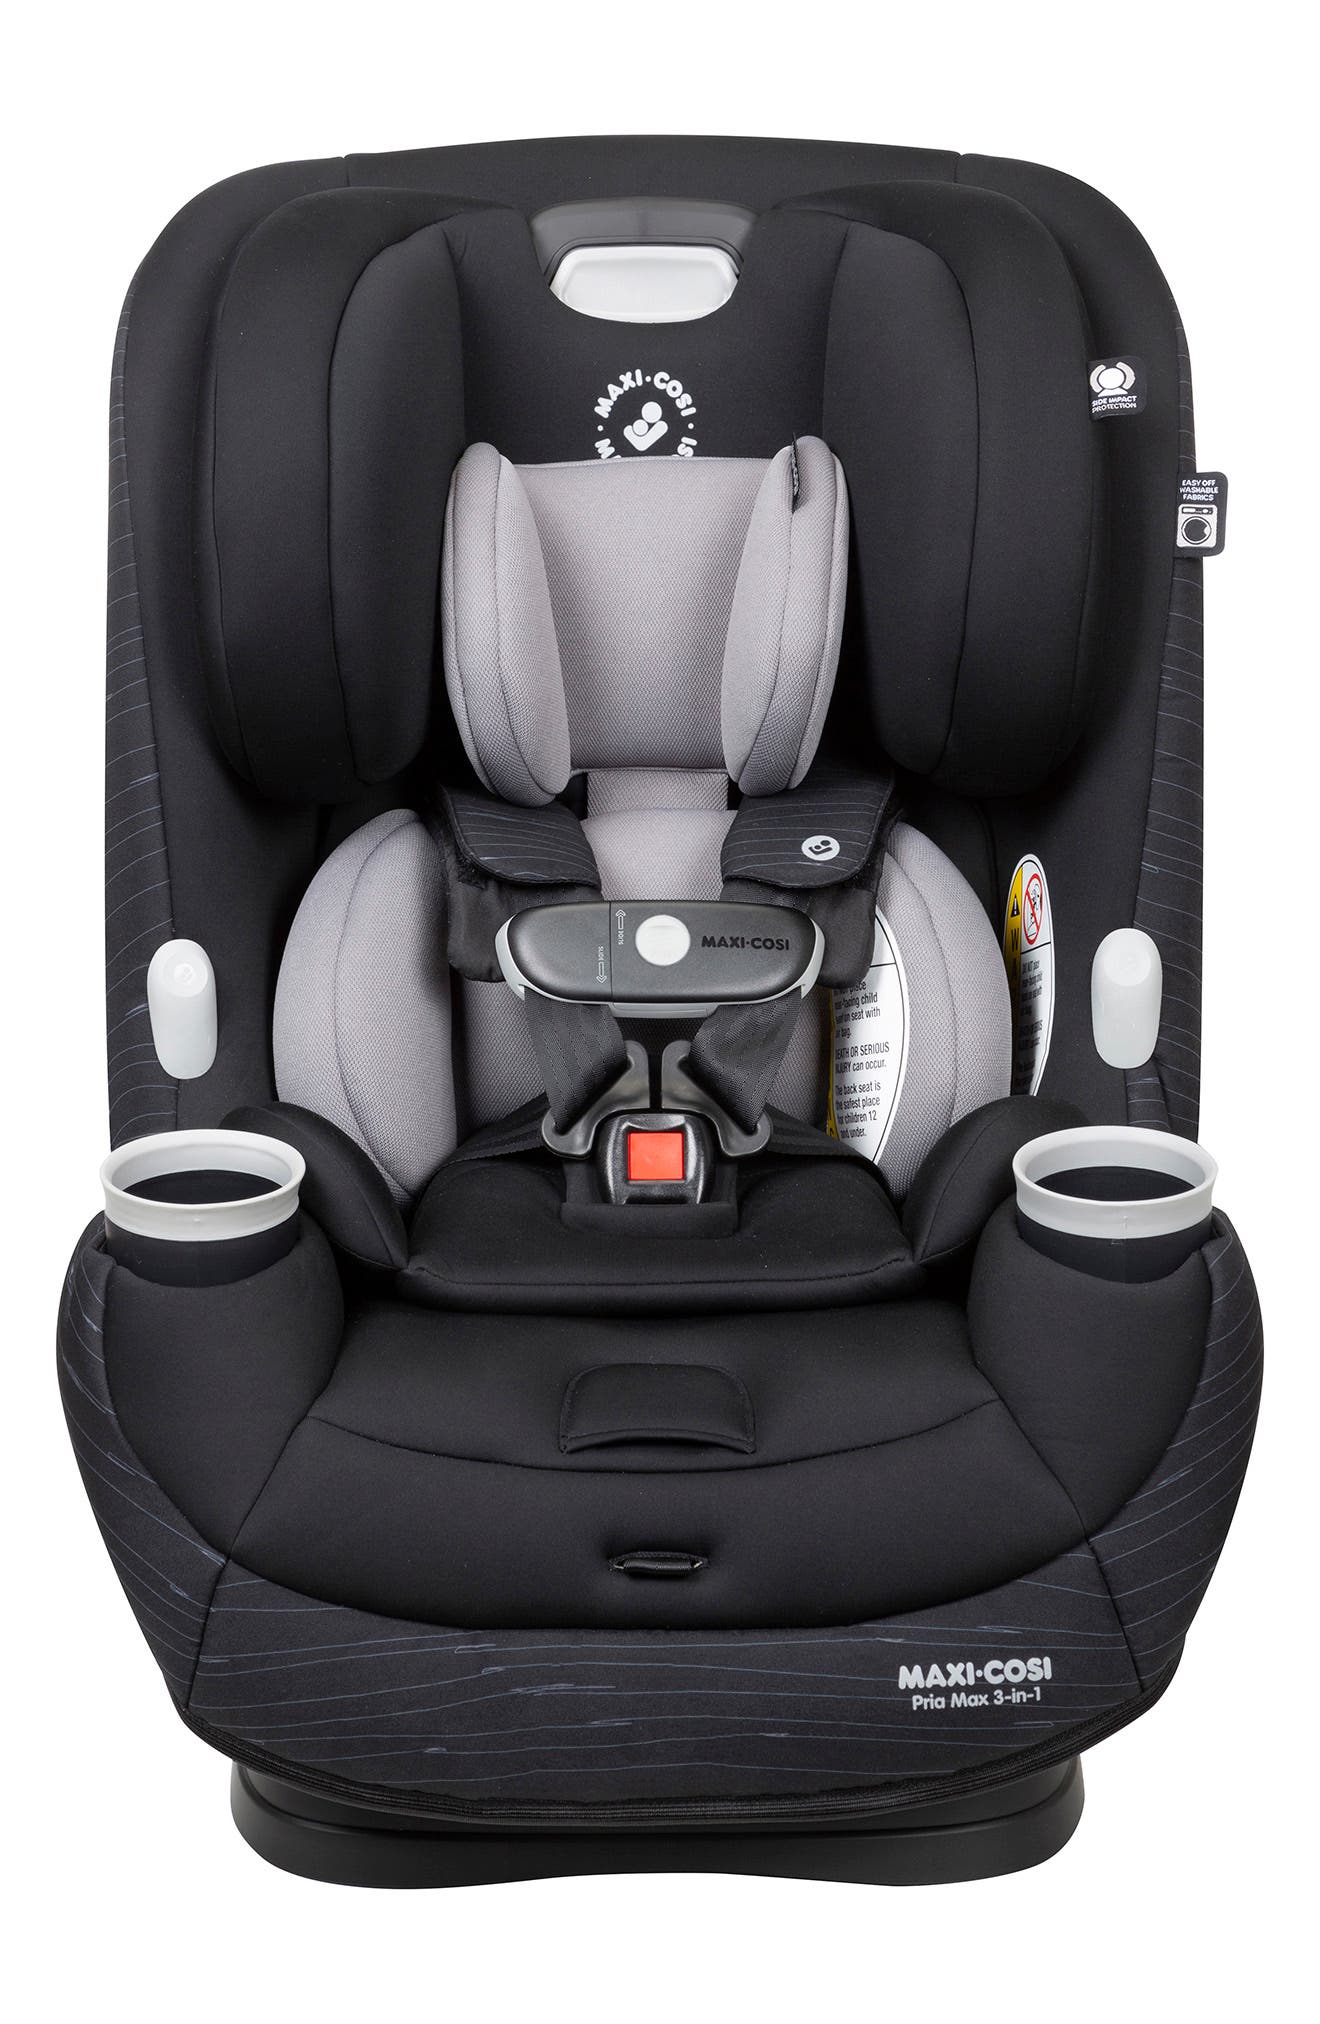 Max 3-in-1 Convertible Car Seat 